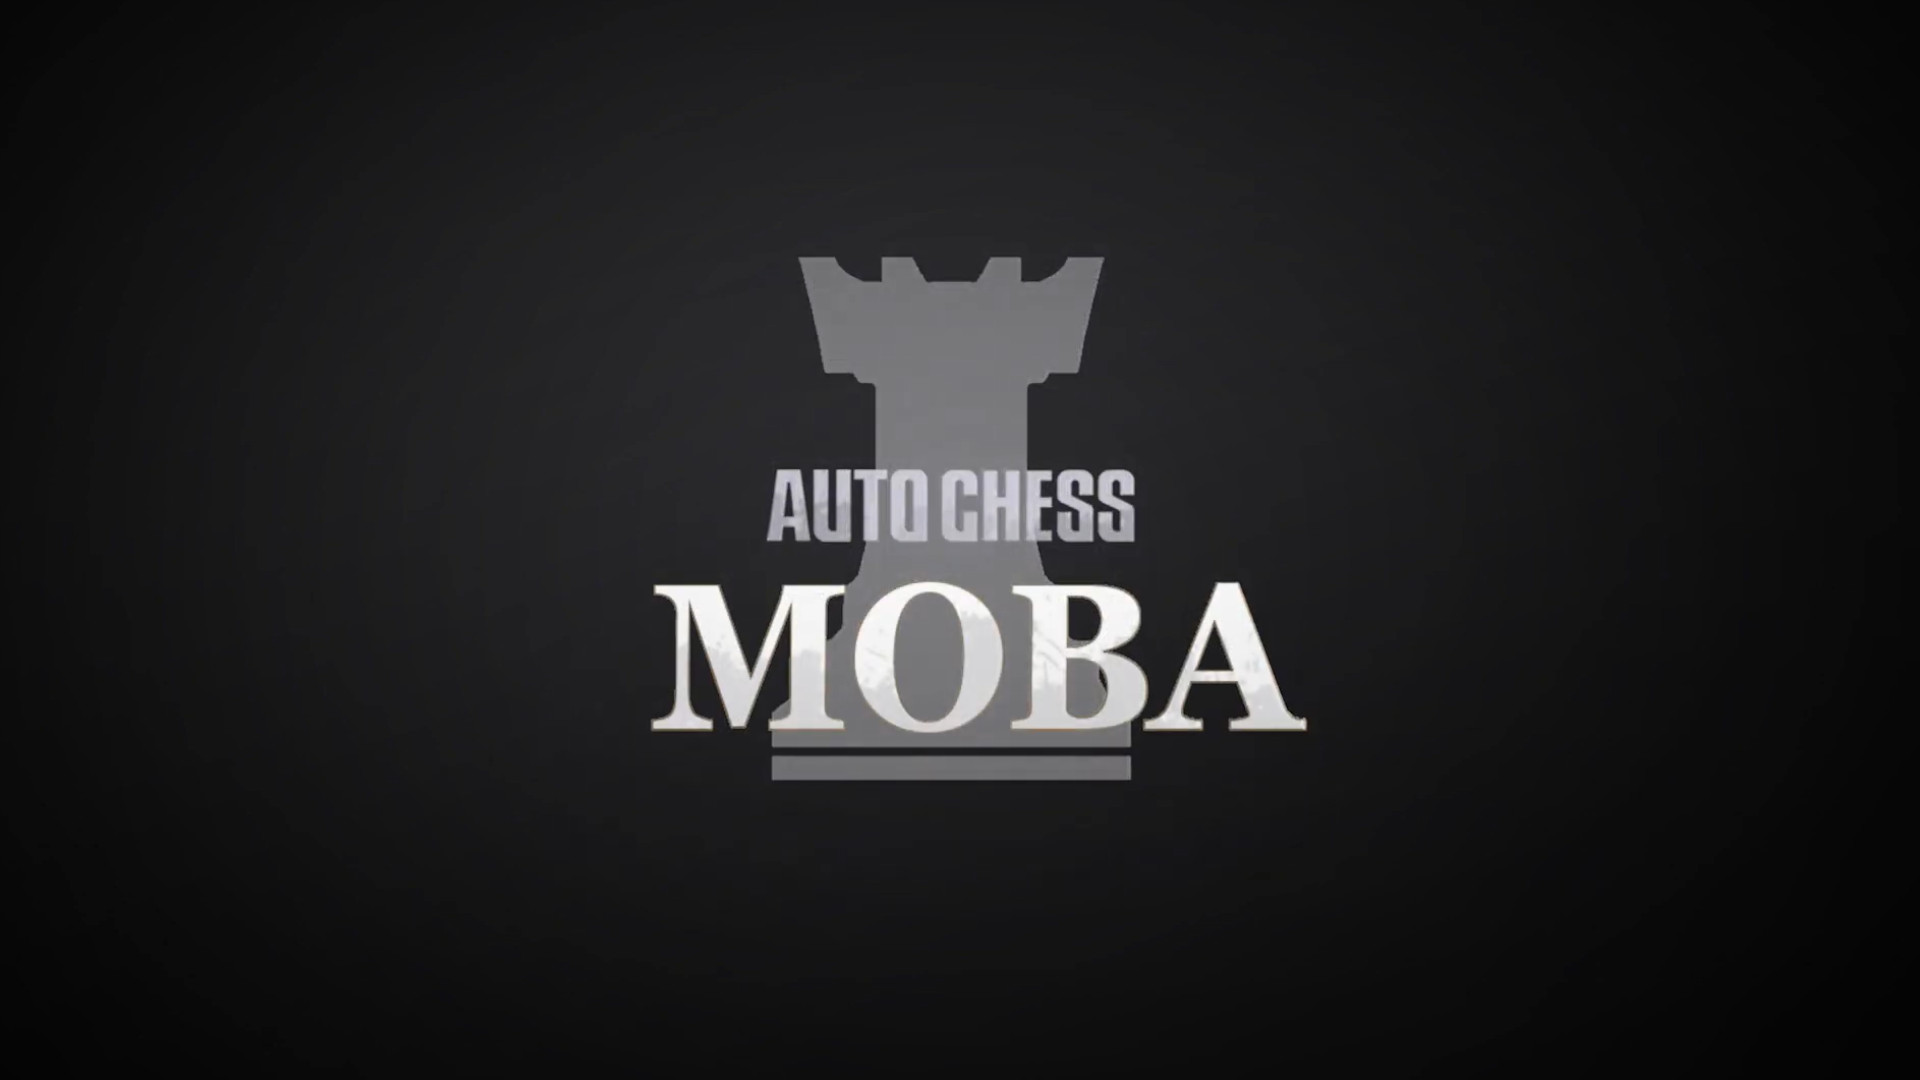 Auto Chess MOBA: Dota 2 is coming to mobile? - Jaxon